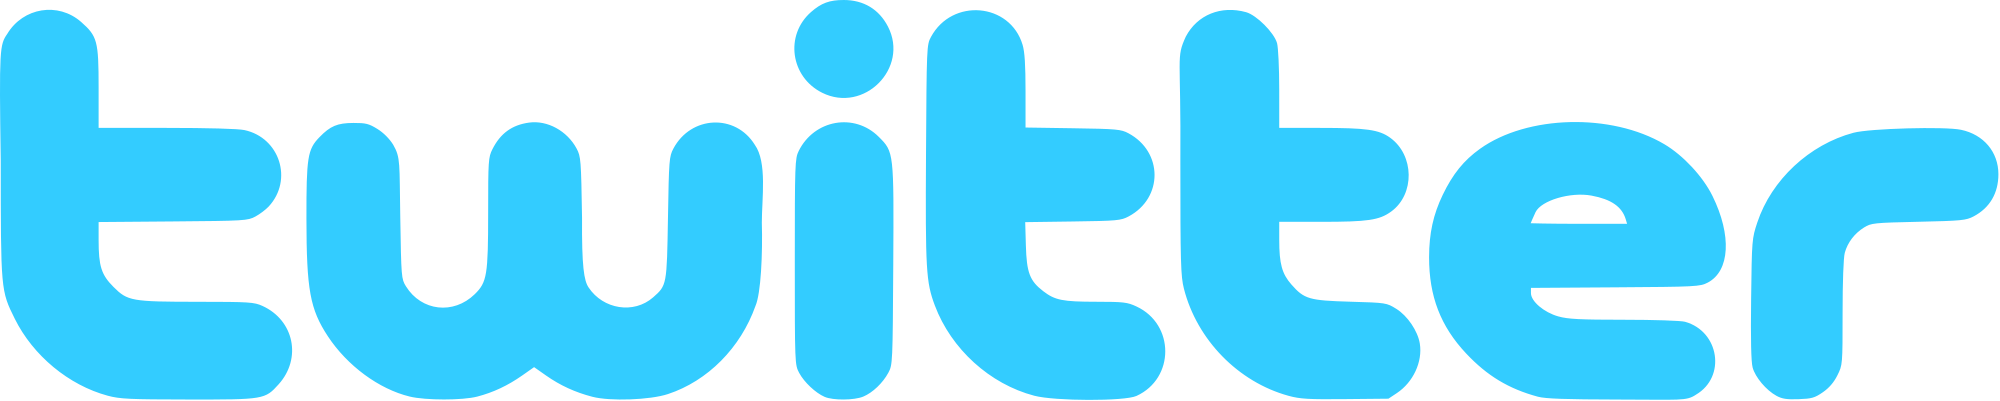 Twitter Logo Png - Vimeo Logo Png (2000x401), Png Download